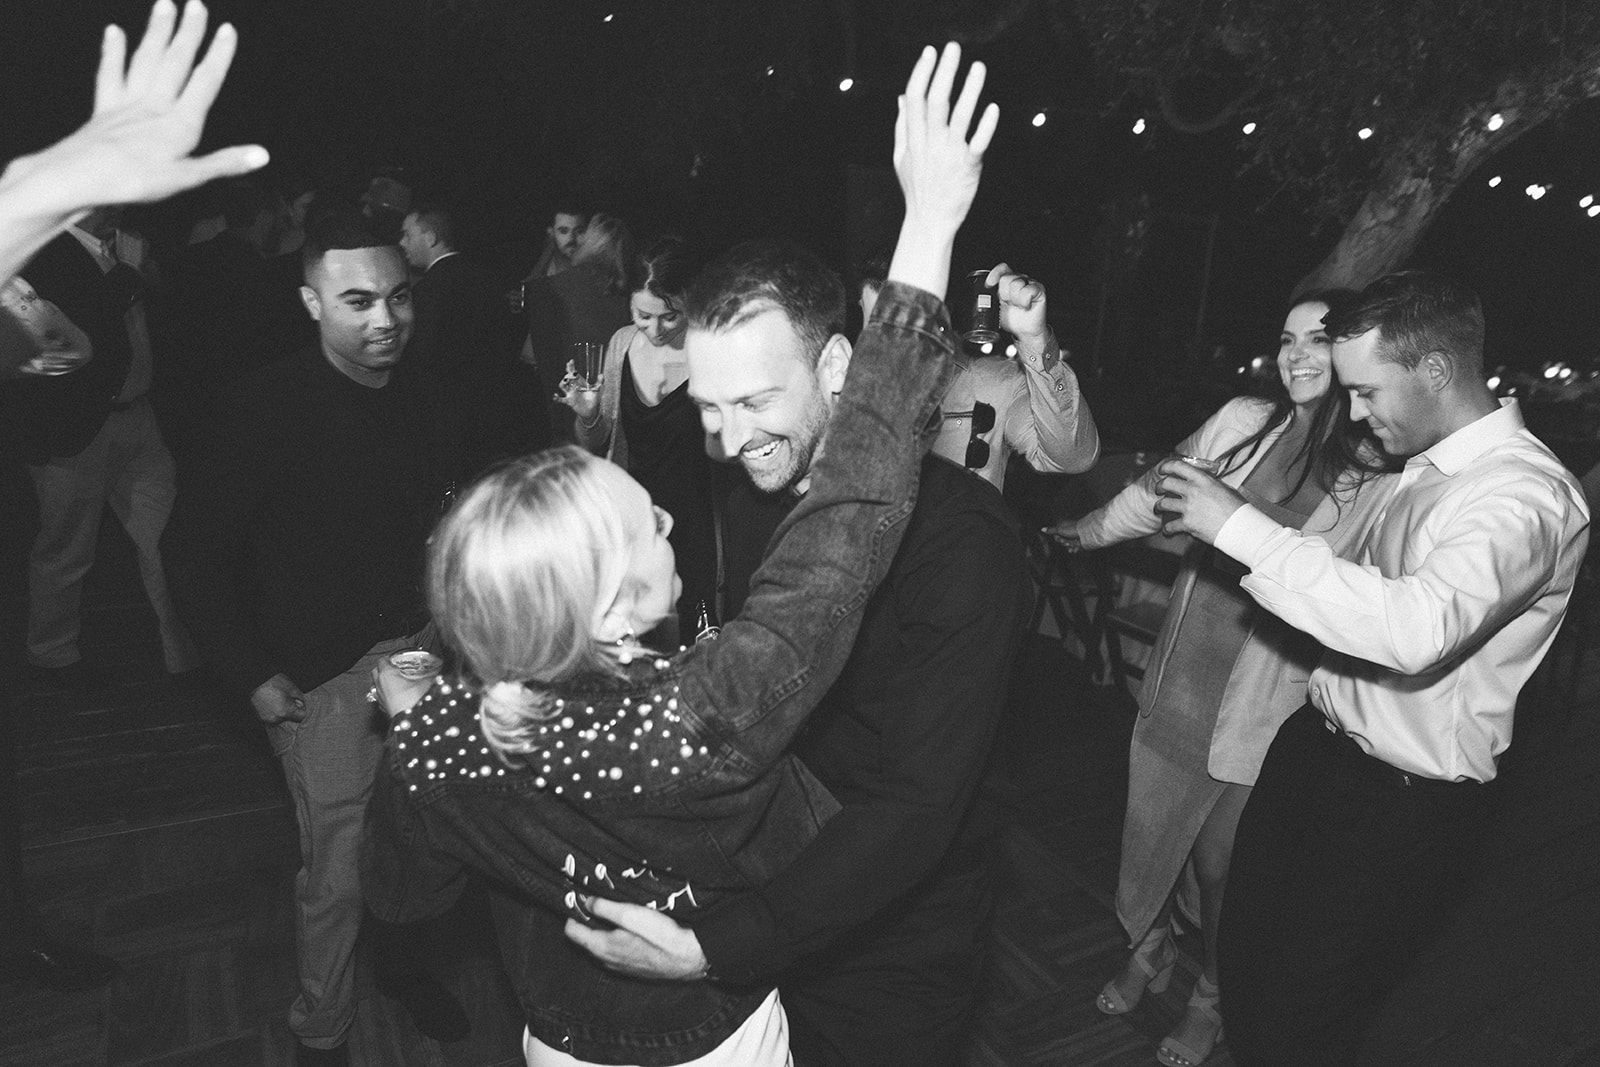 Couple dances their wedding night away during reception at Elings Park in Santa Barbara. 